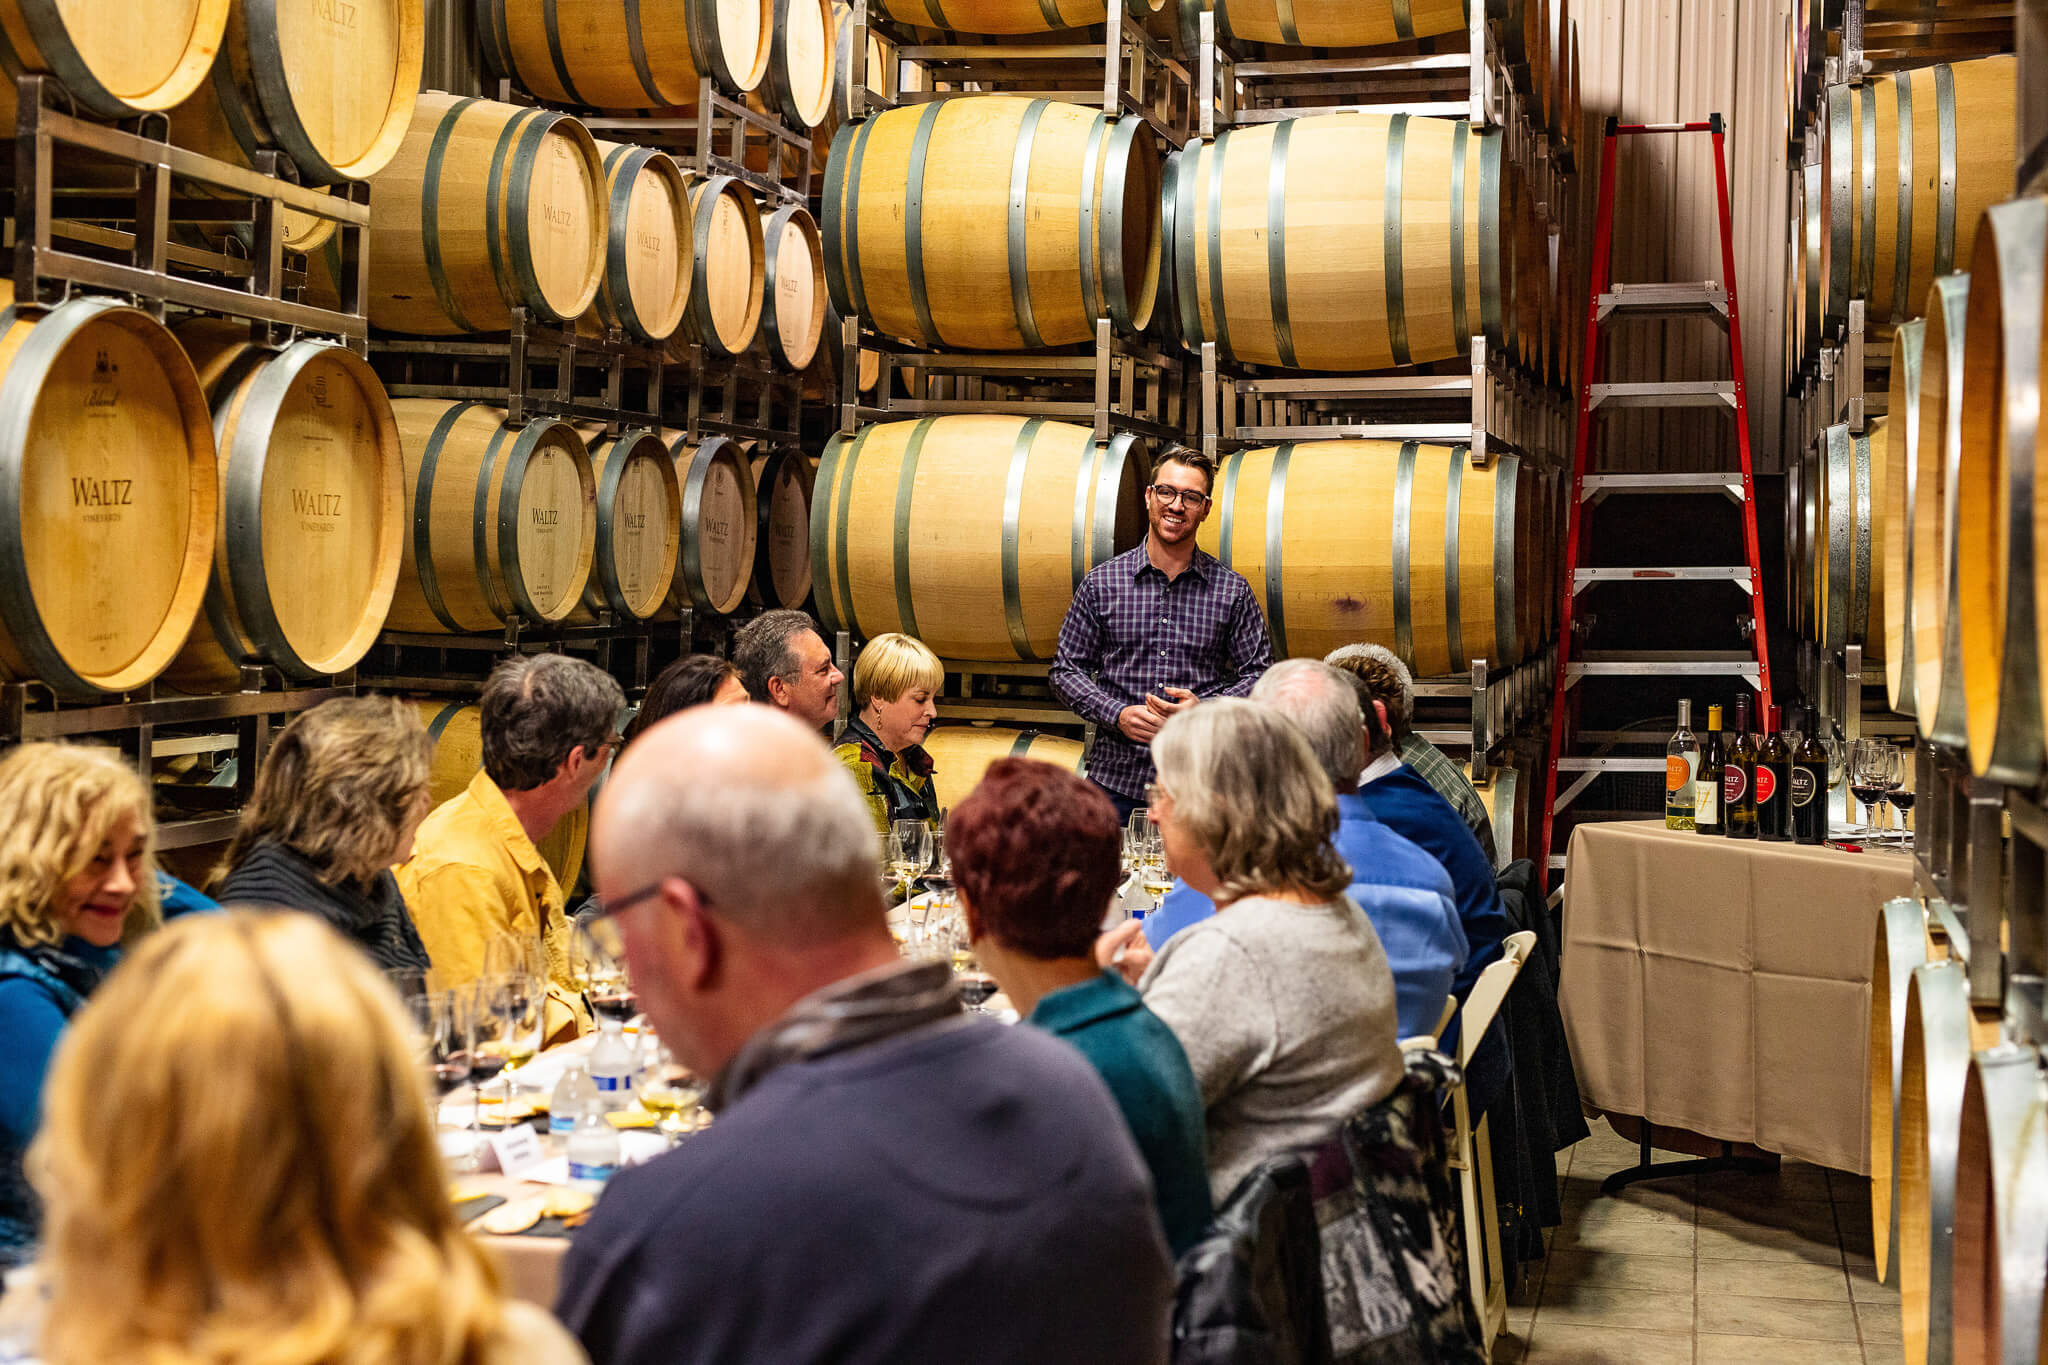 Zach Waltz with wine club members in barrel room